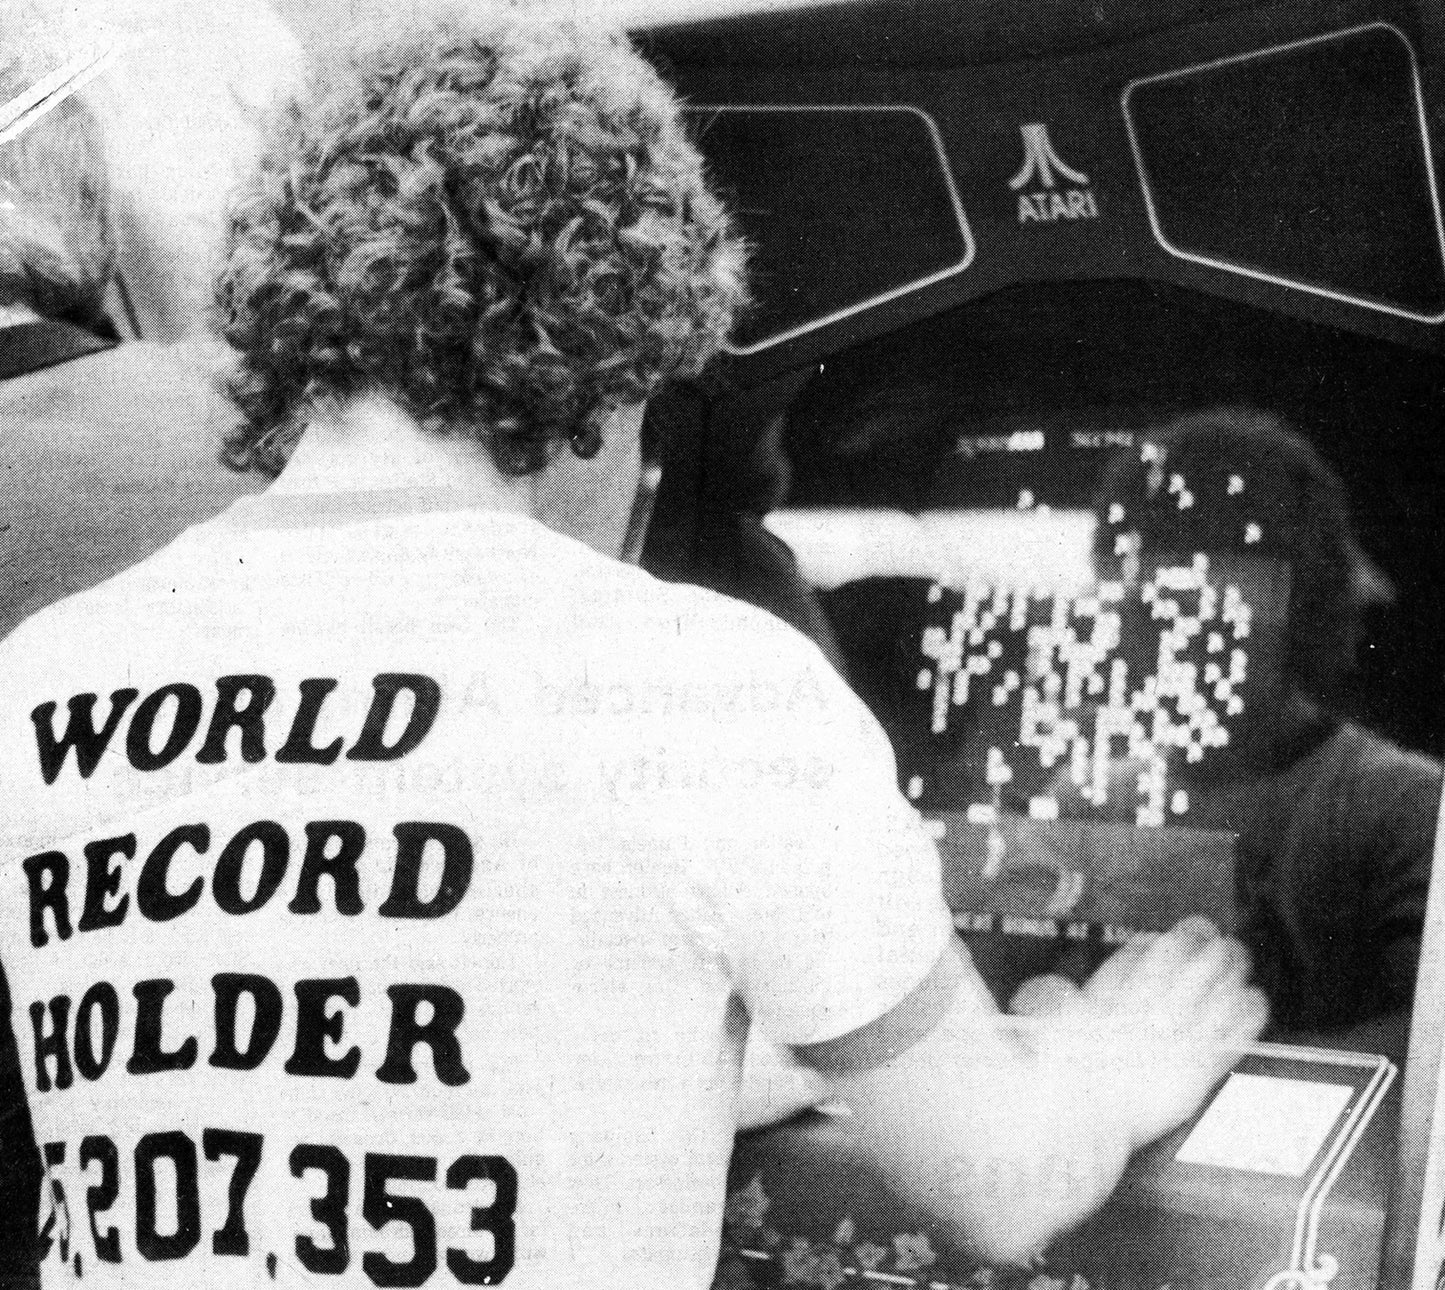 WORLD RECORD HOLDER 1982 CLASSIC EDITION RINGER T-SHIRT